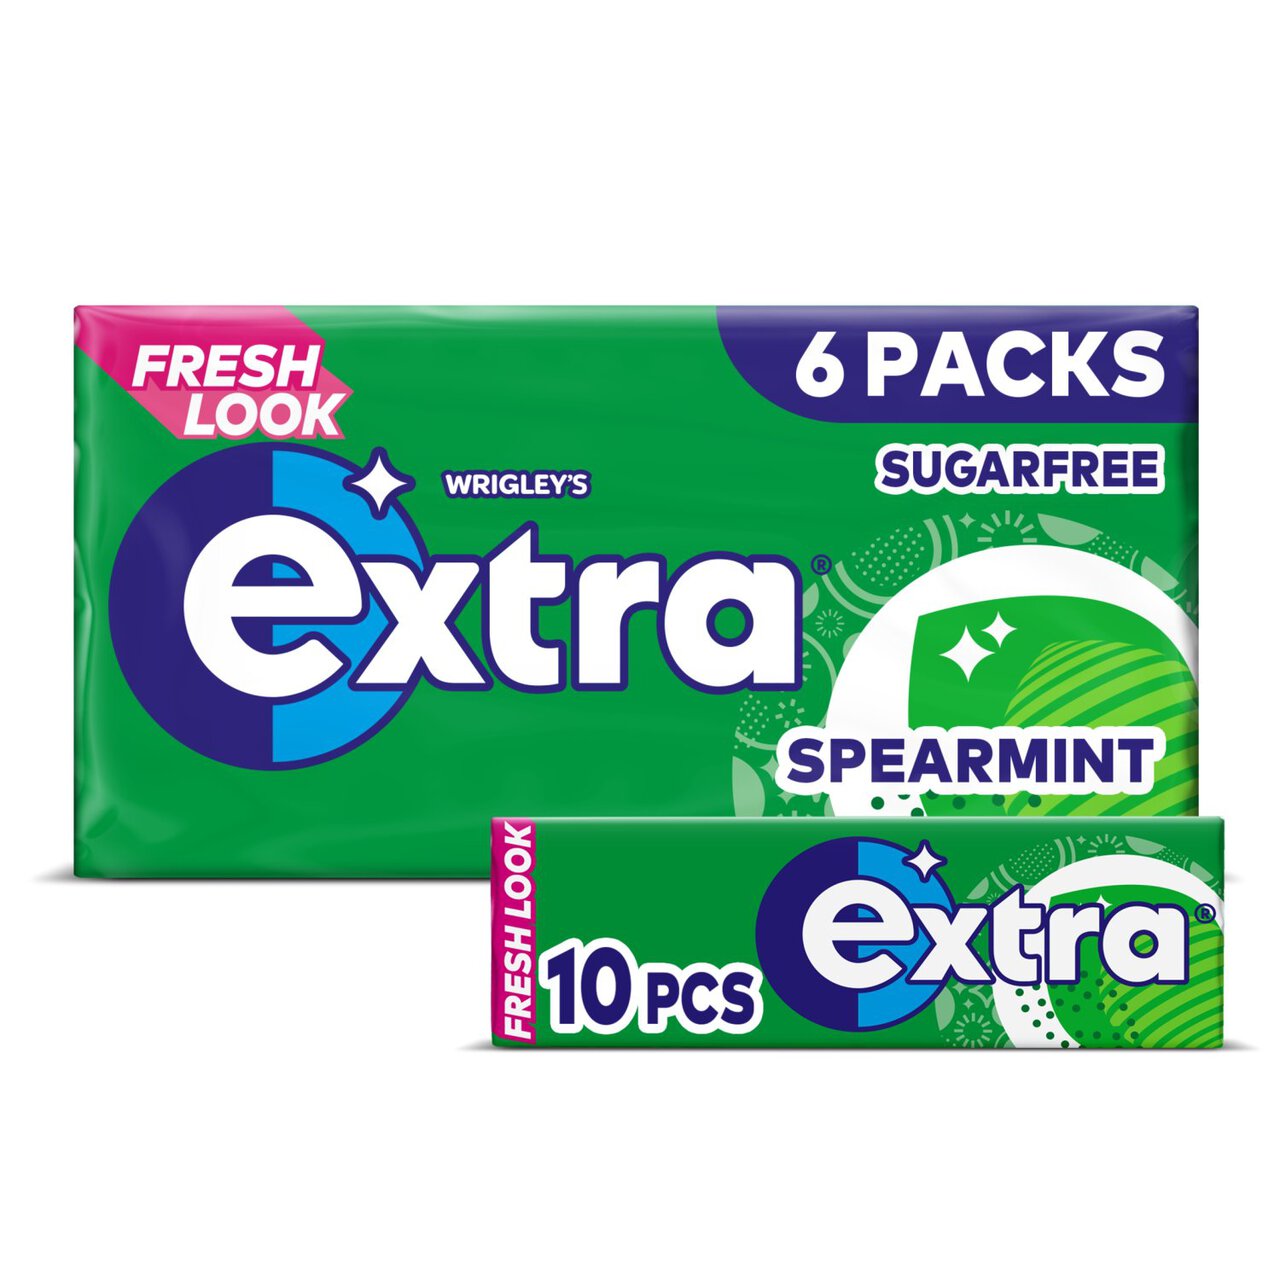 Extra Spearmint Sugarfree Chewing Gum Multipack 6 per pack